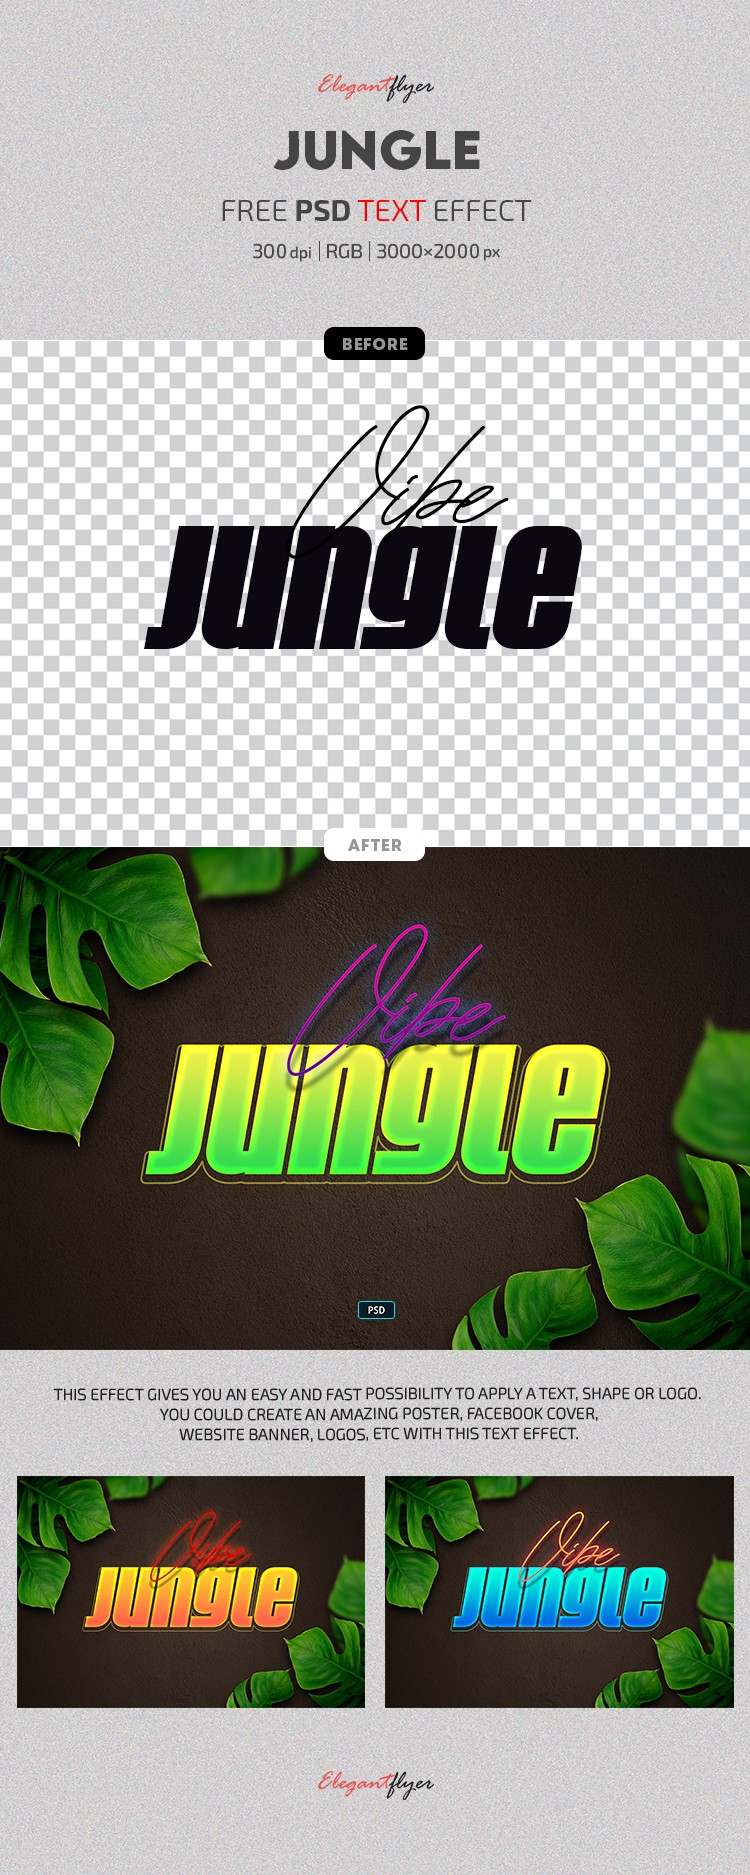 Jungle Text Effect by ElegantFlyer